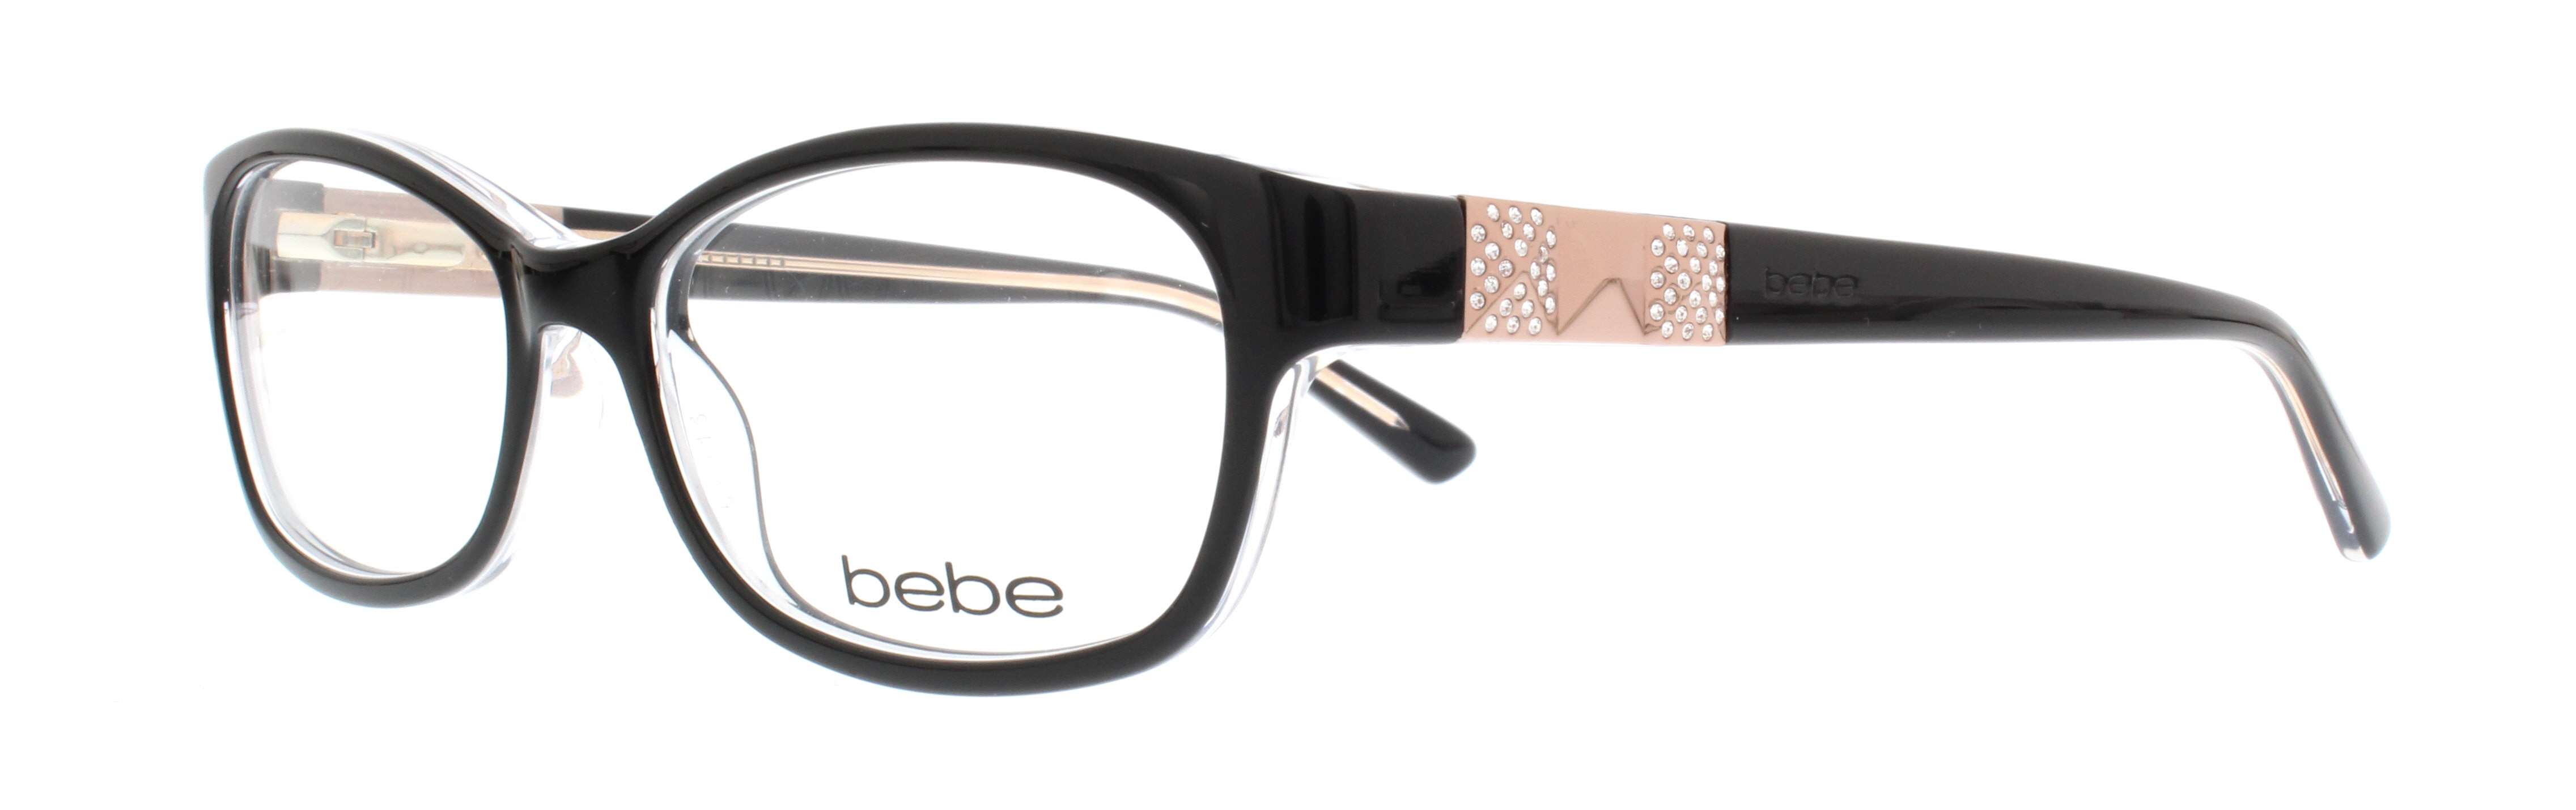 Picture of Bebe Eyeglasses BB5082 Lady Vegas